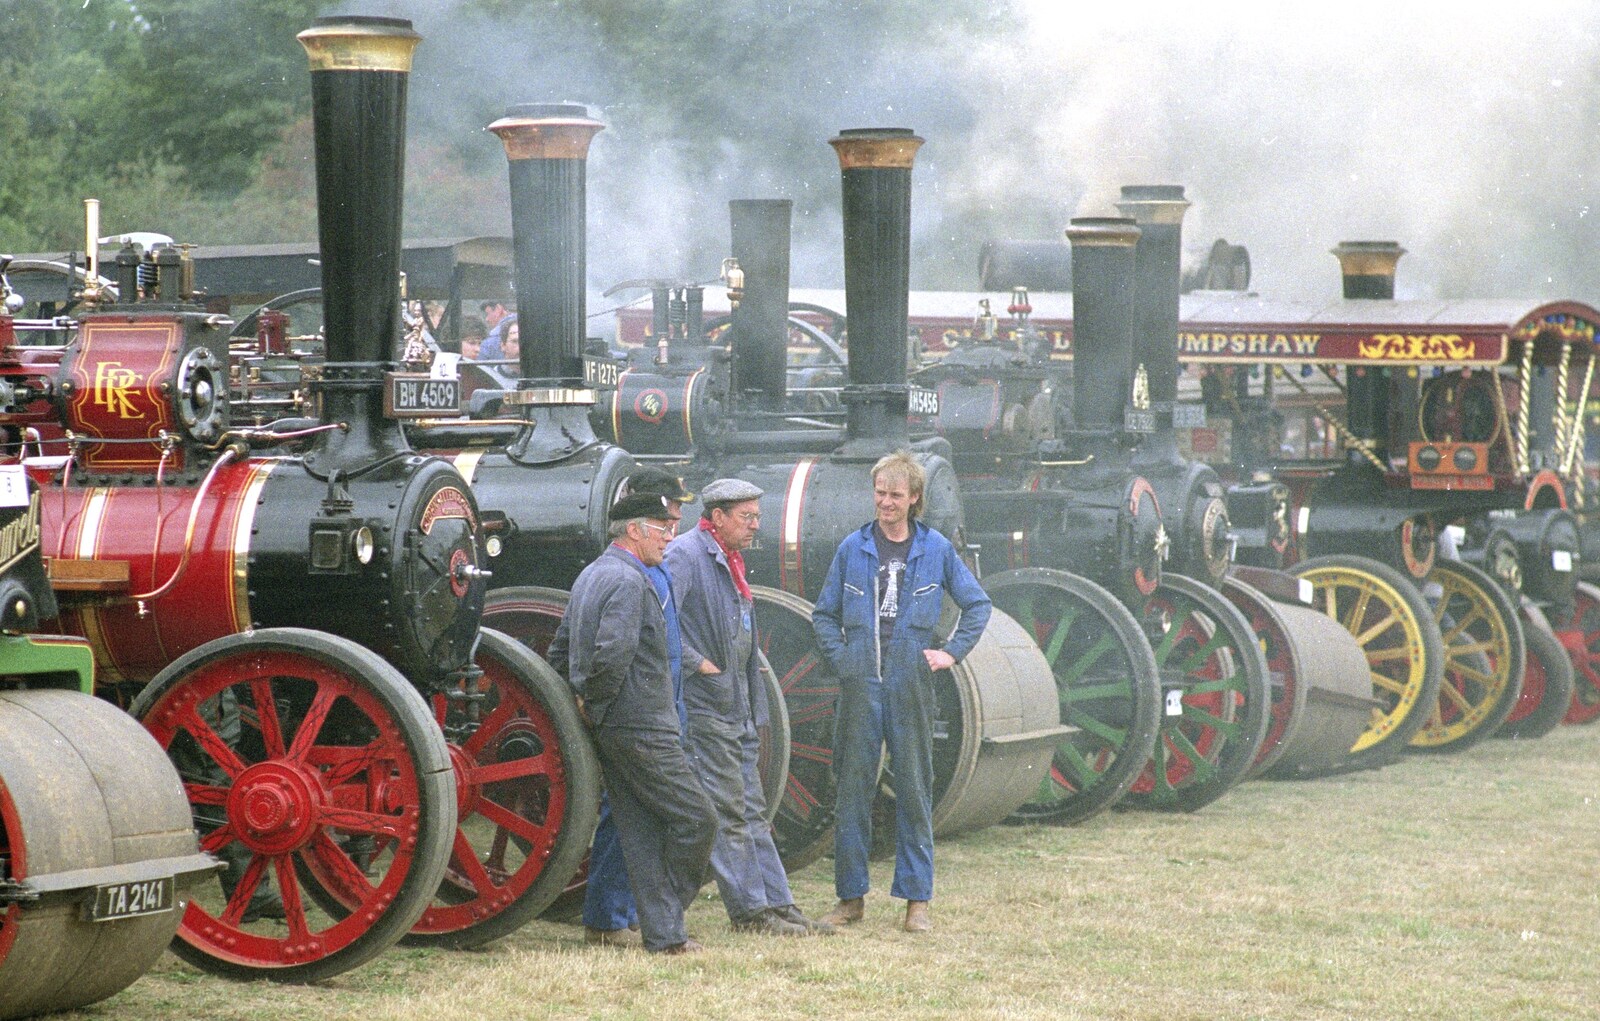 Blokes in boiler suits chat next to engines from The Henham Steam Fair, Henham, Suffolk - 19th September 1990